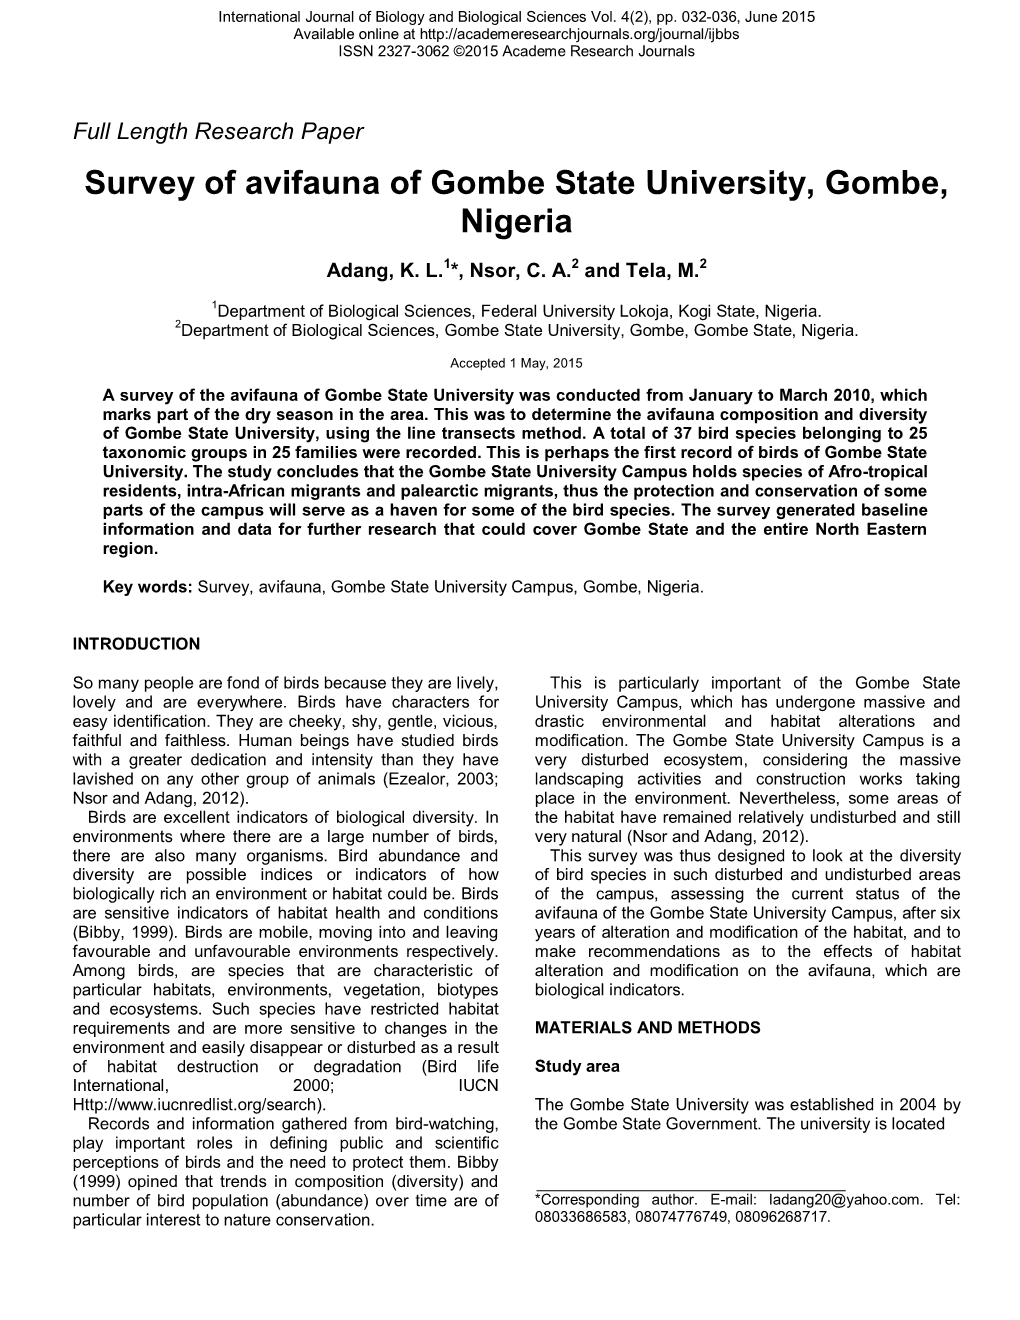 Survey of Avifauna of Gombe State University, Gombe, Nigeria